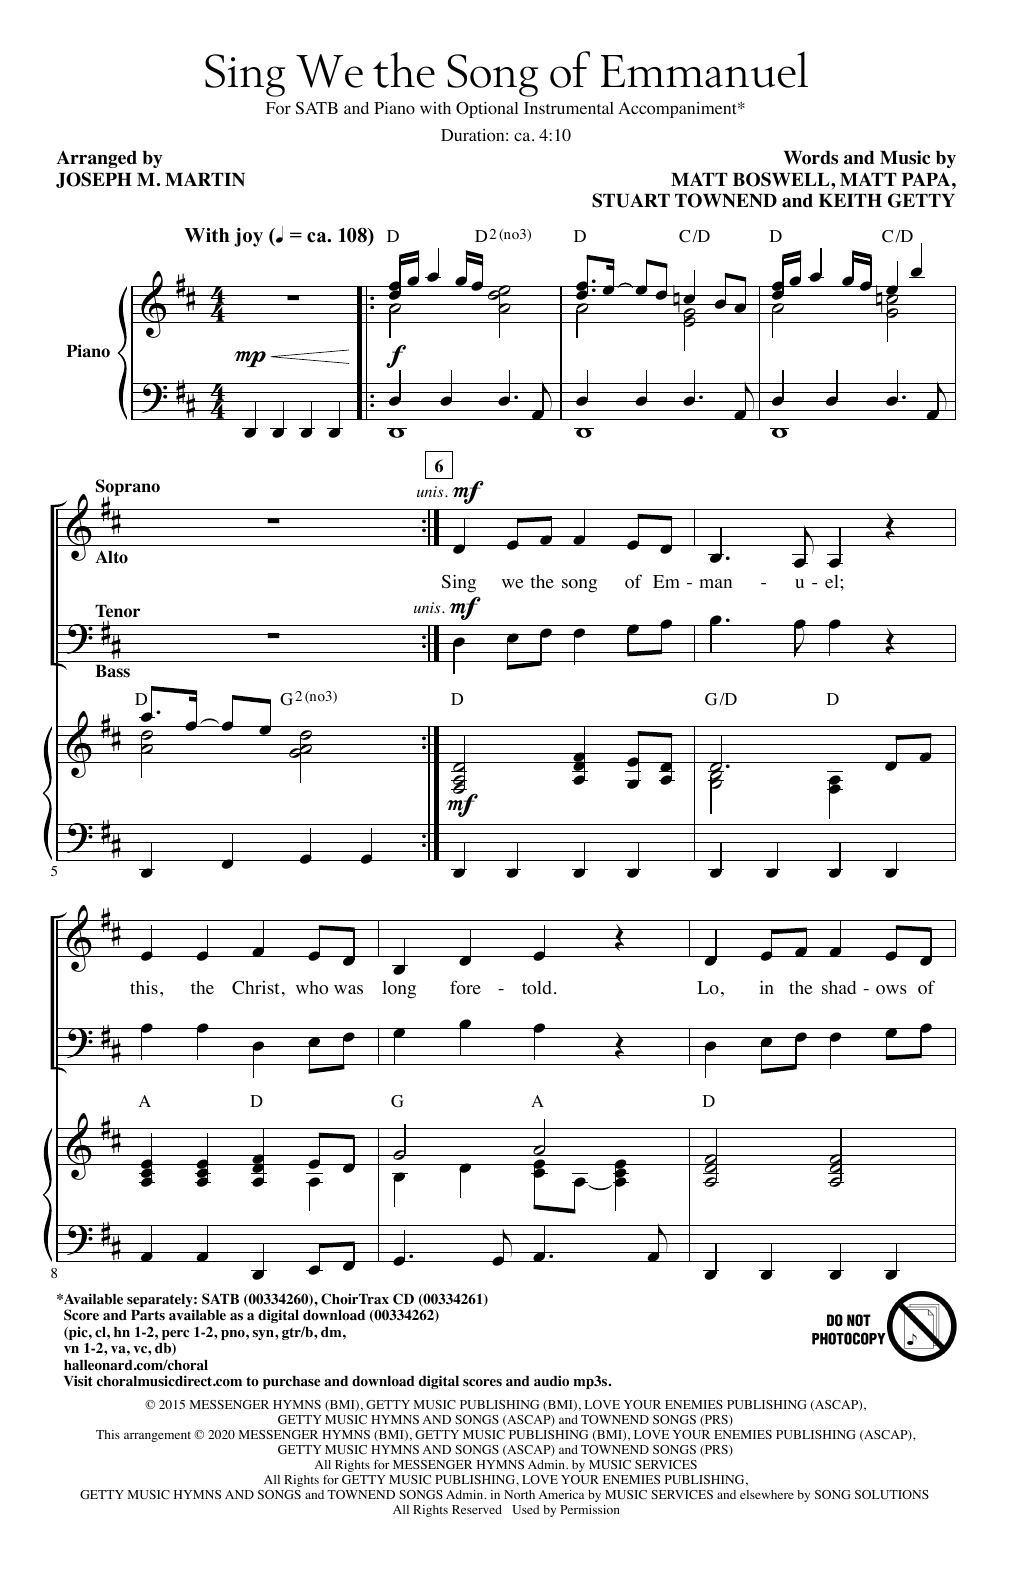 Keith & Kristyn Getty, Matt Boswell and Matt Papa Sing We The Song Of Emmanuel (arr. Joseph M. Martin) sheet music notes and chords arranged for SATB Choir